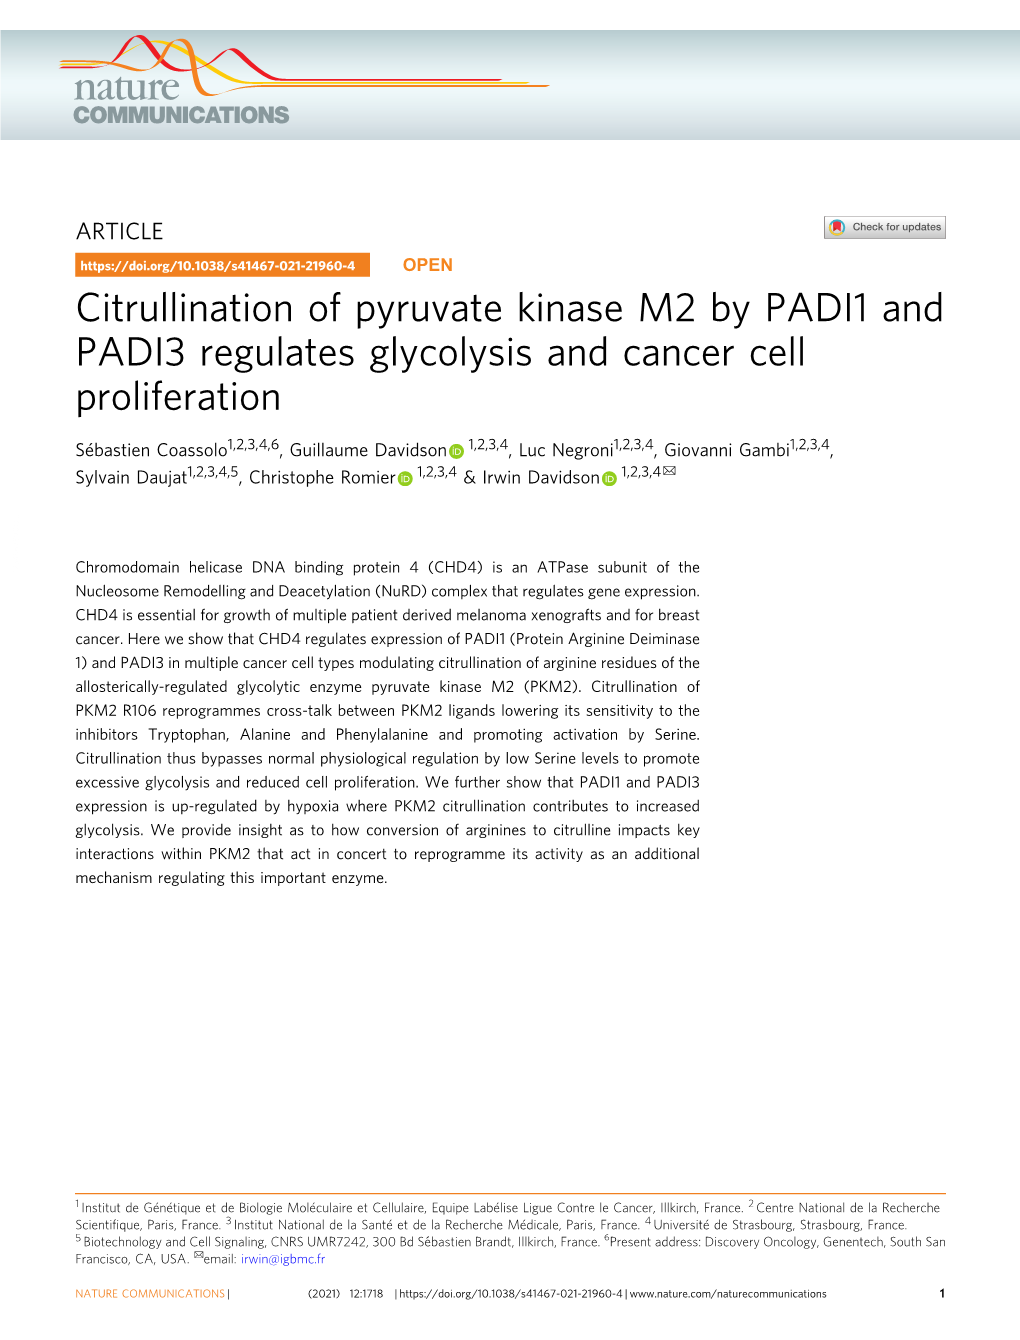 Citrullination of Pyruvate Kinase M2 by PADI1 and PADI3 Regulates Glycolysis and Cancer Cell Proliferation